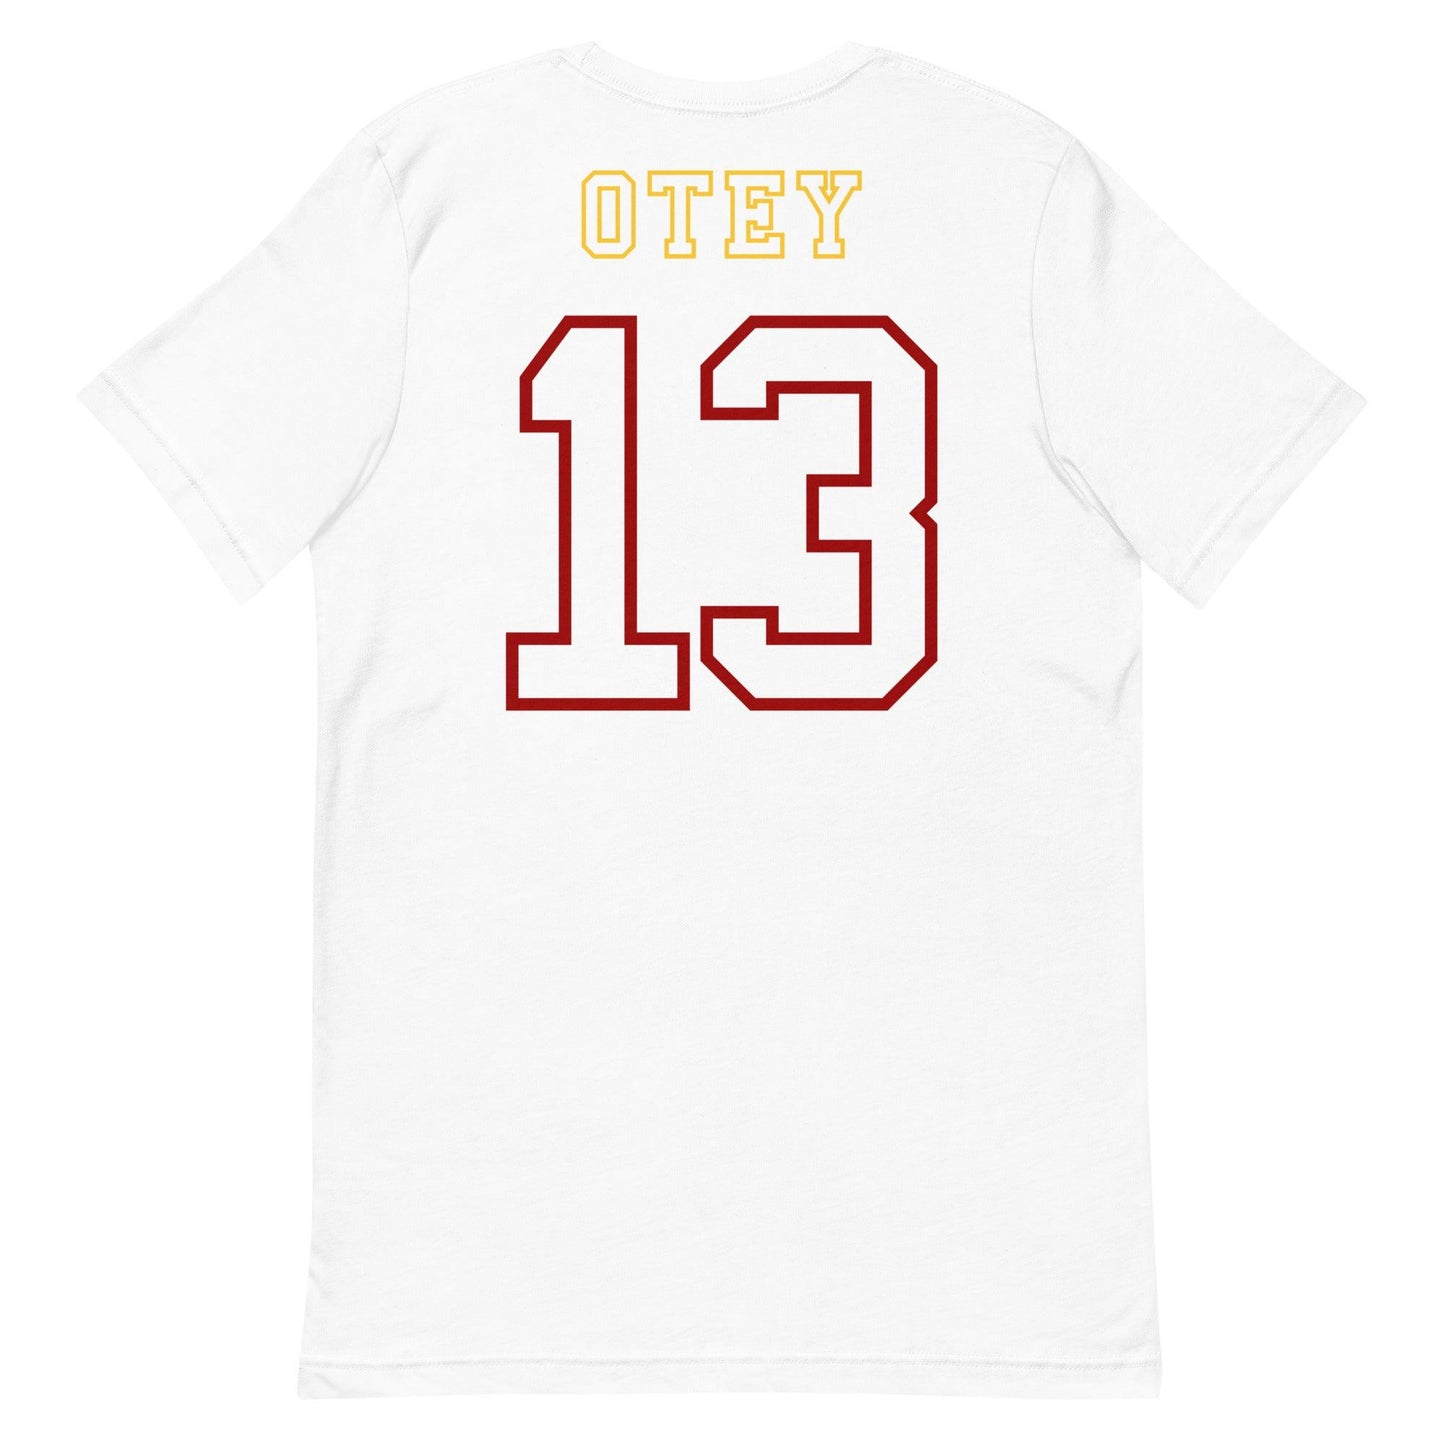 Adonis Otey "Jersey" t-shirt - Fan Arch